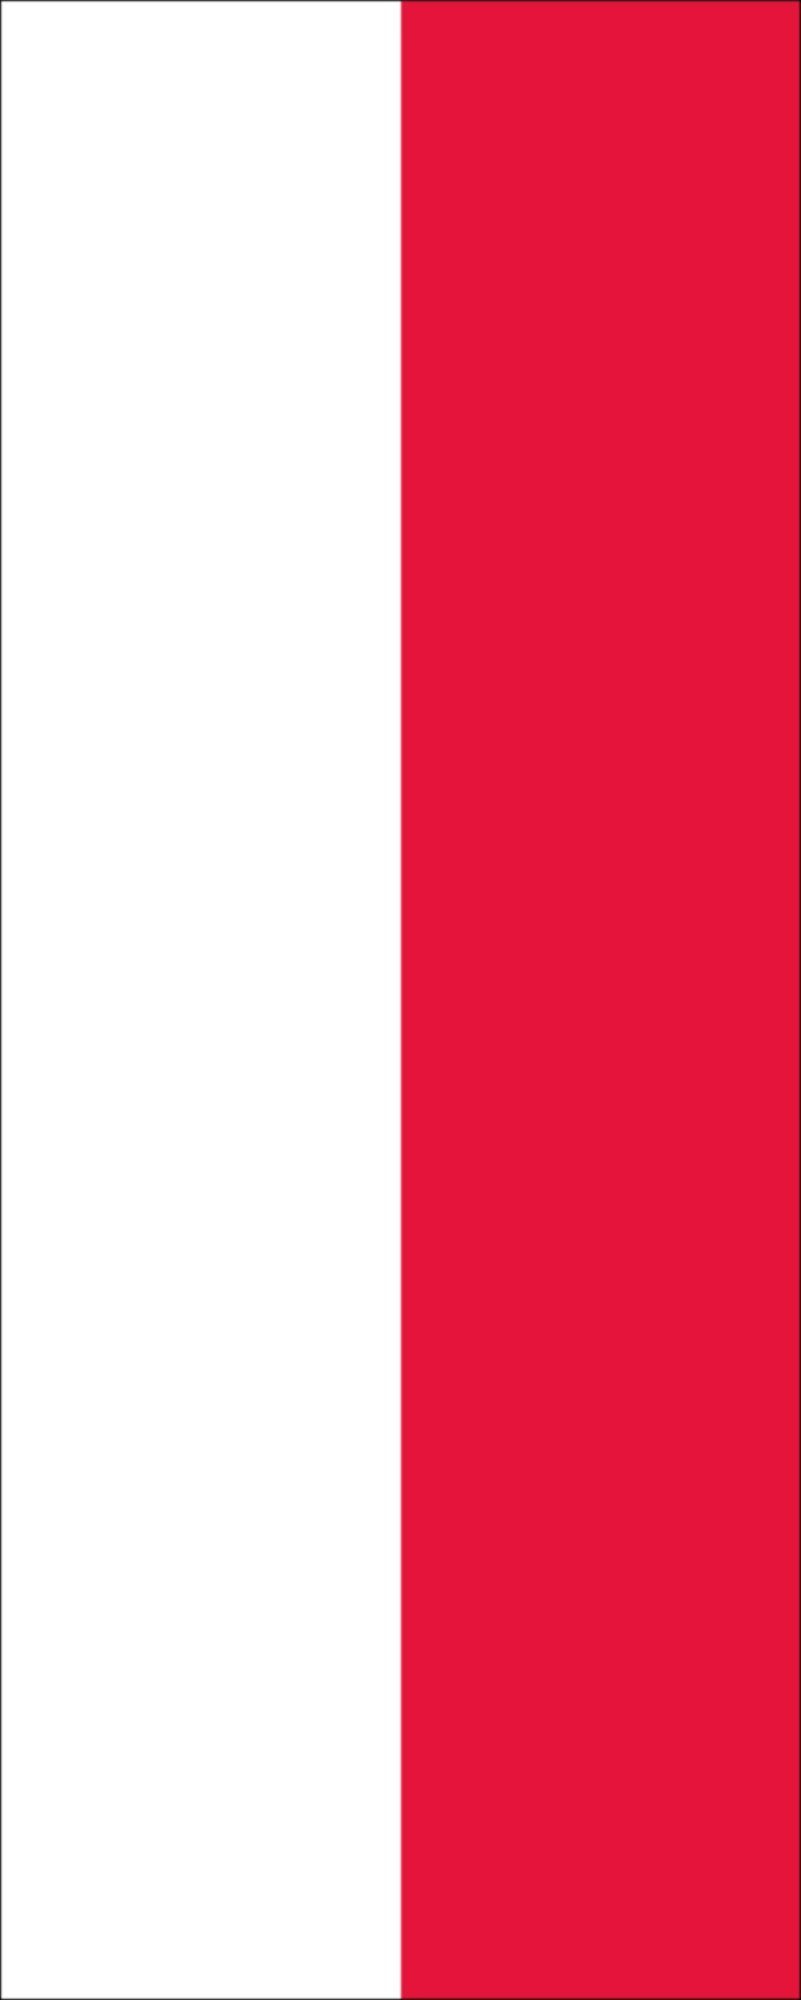 Hochformat Polen flaggenmeer Flagge g/m² 160